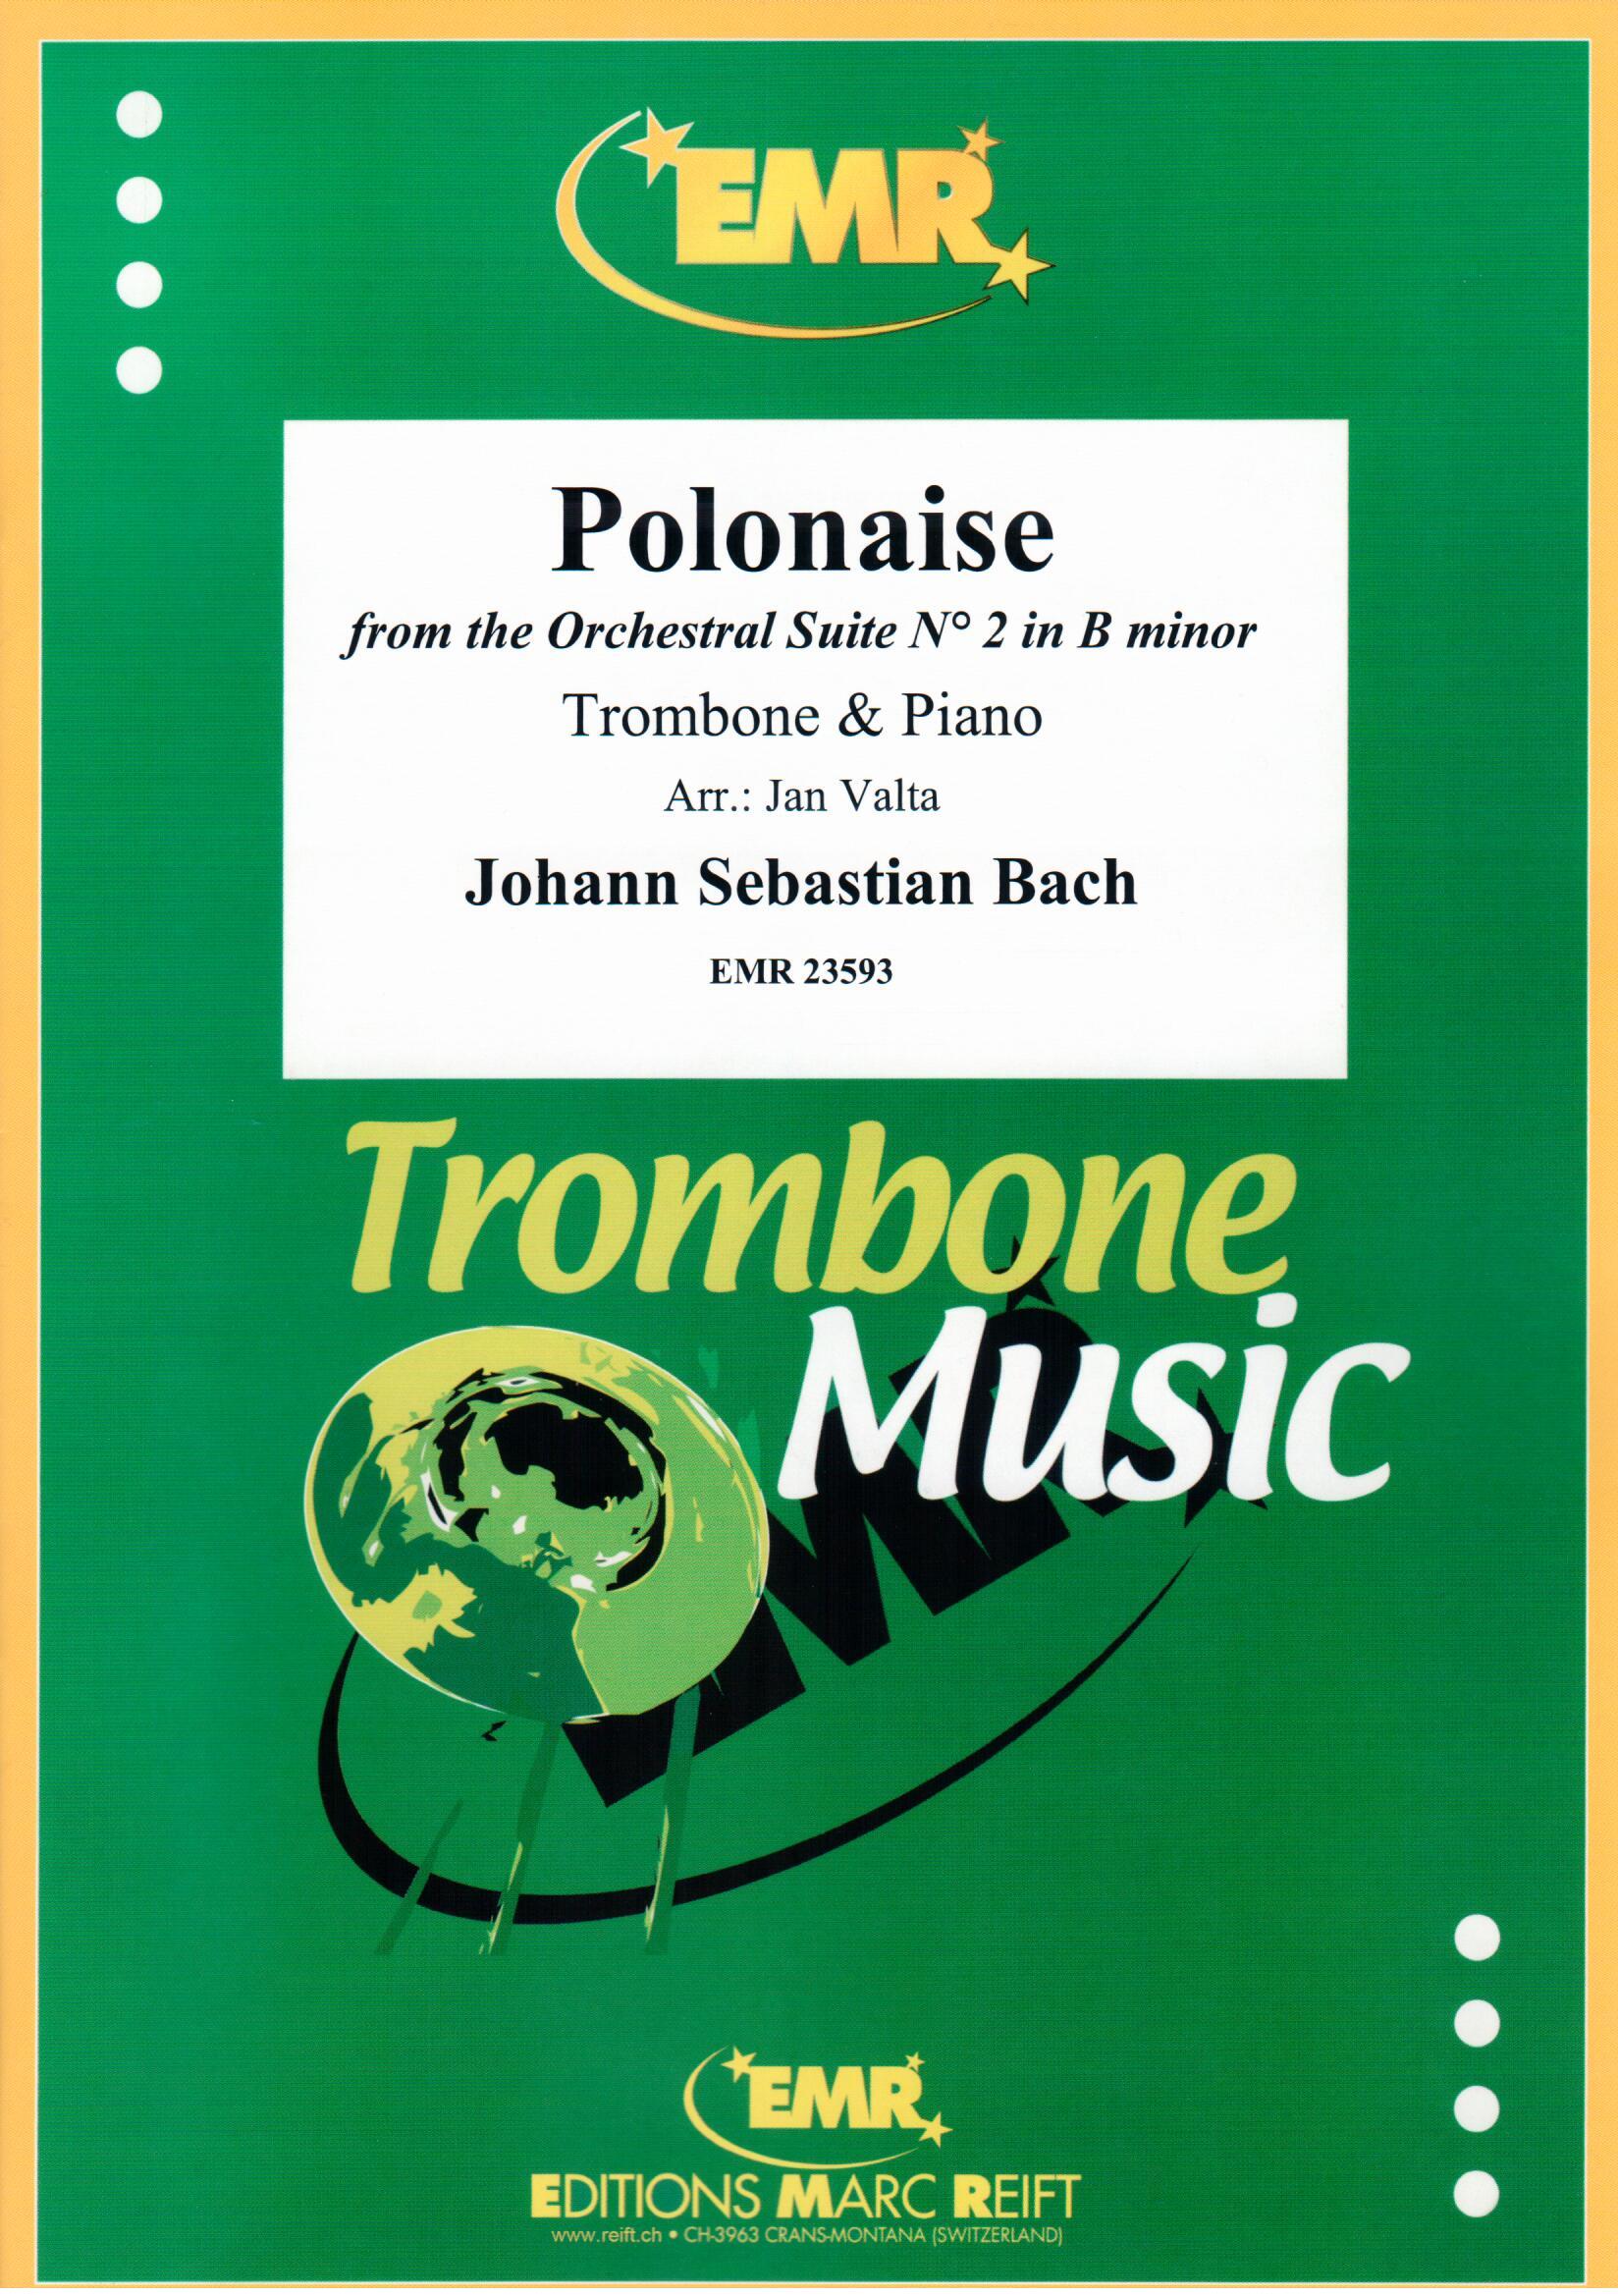 POLONAISE, SOLOS - Trombone